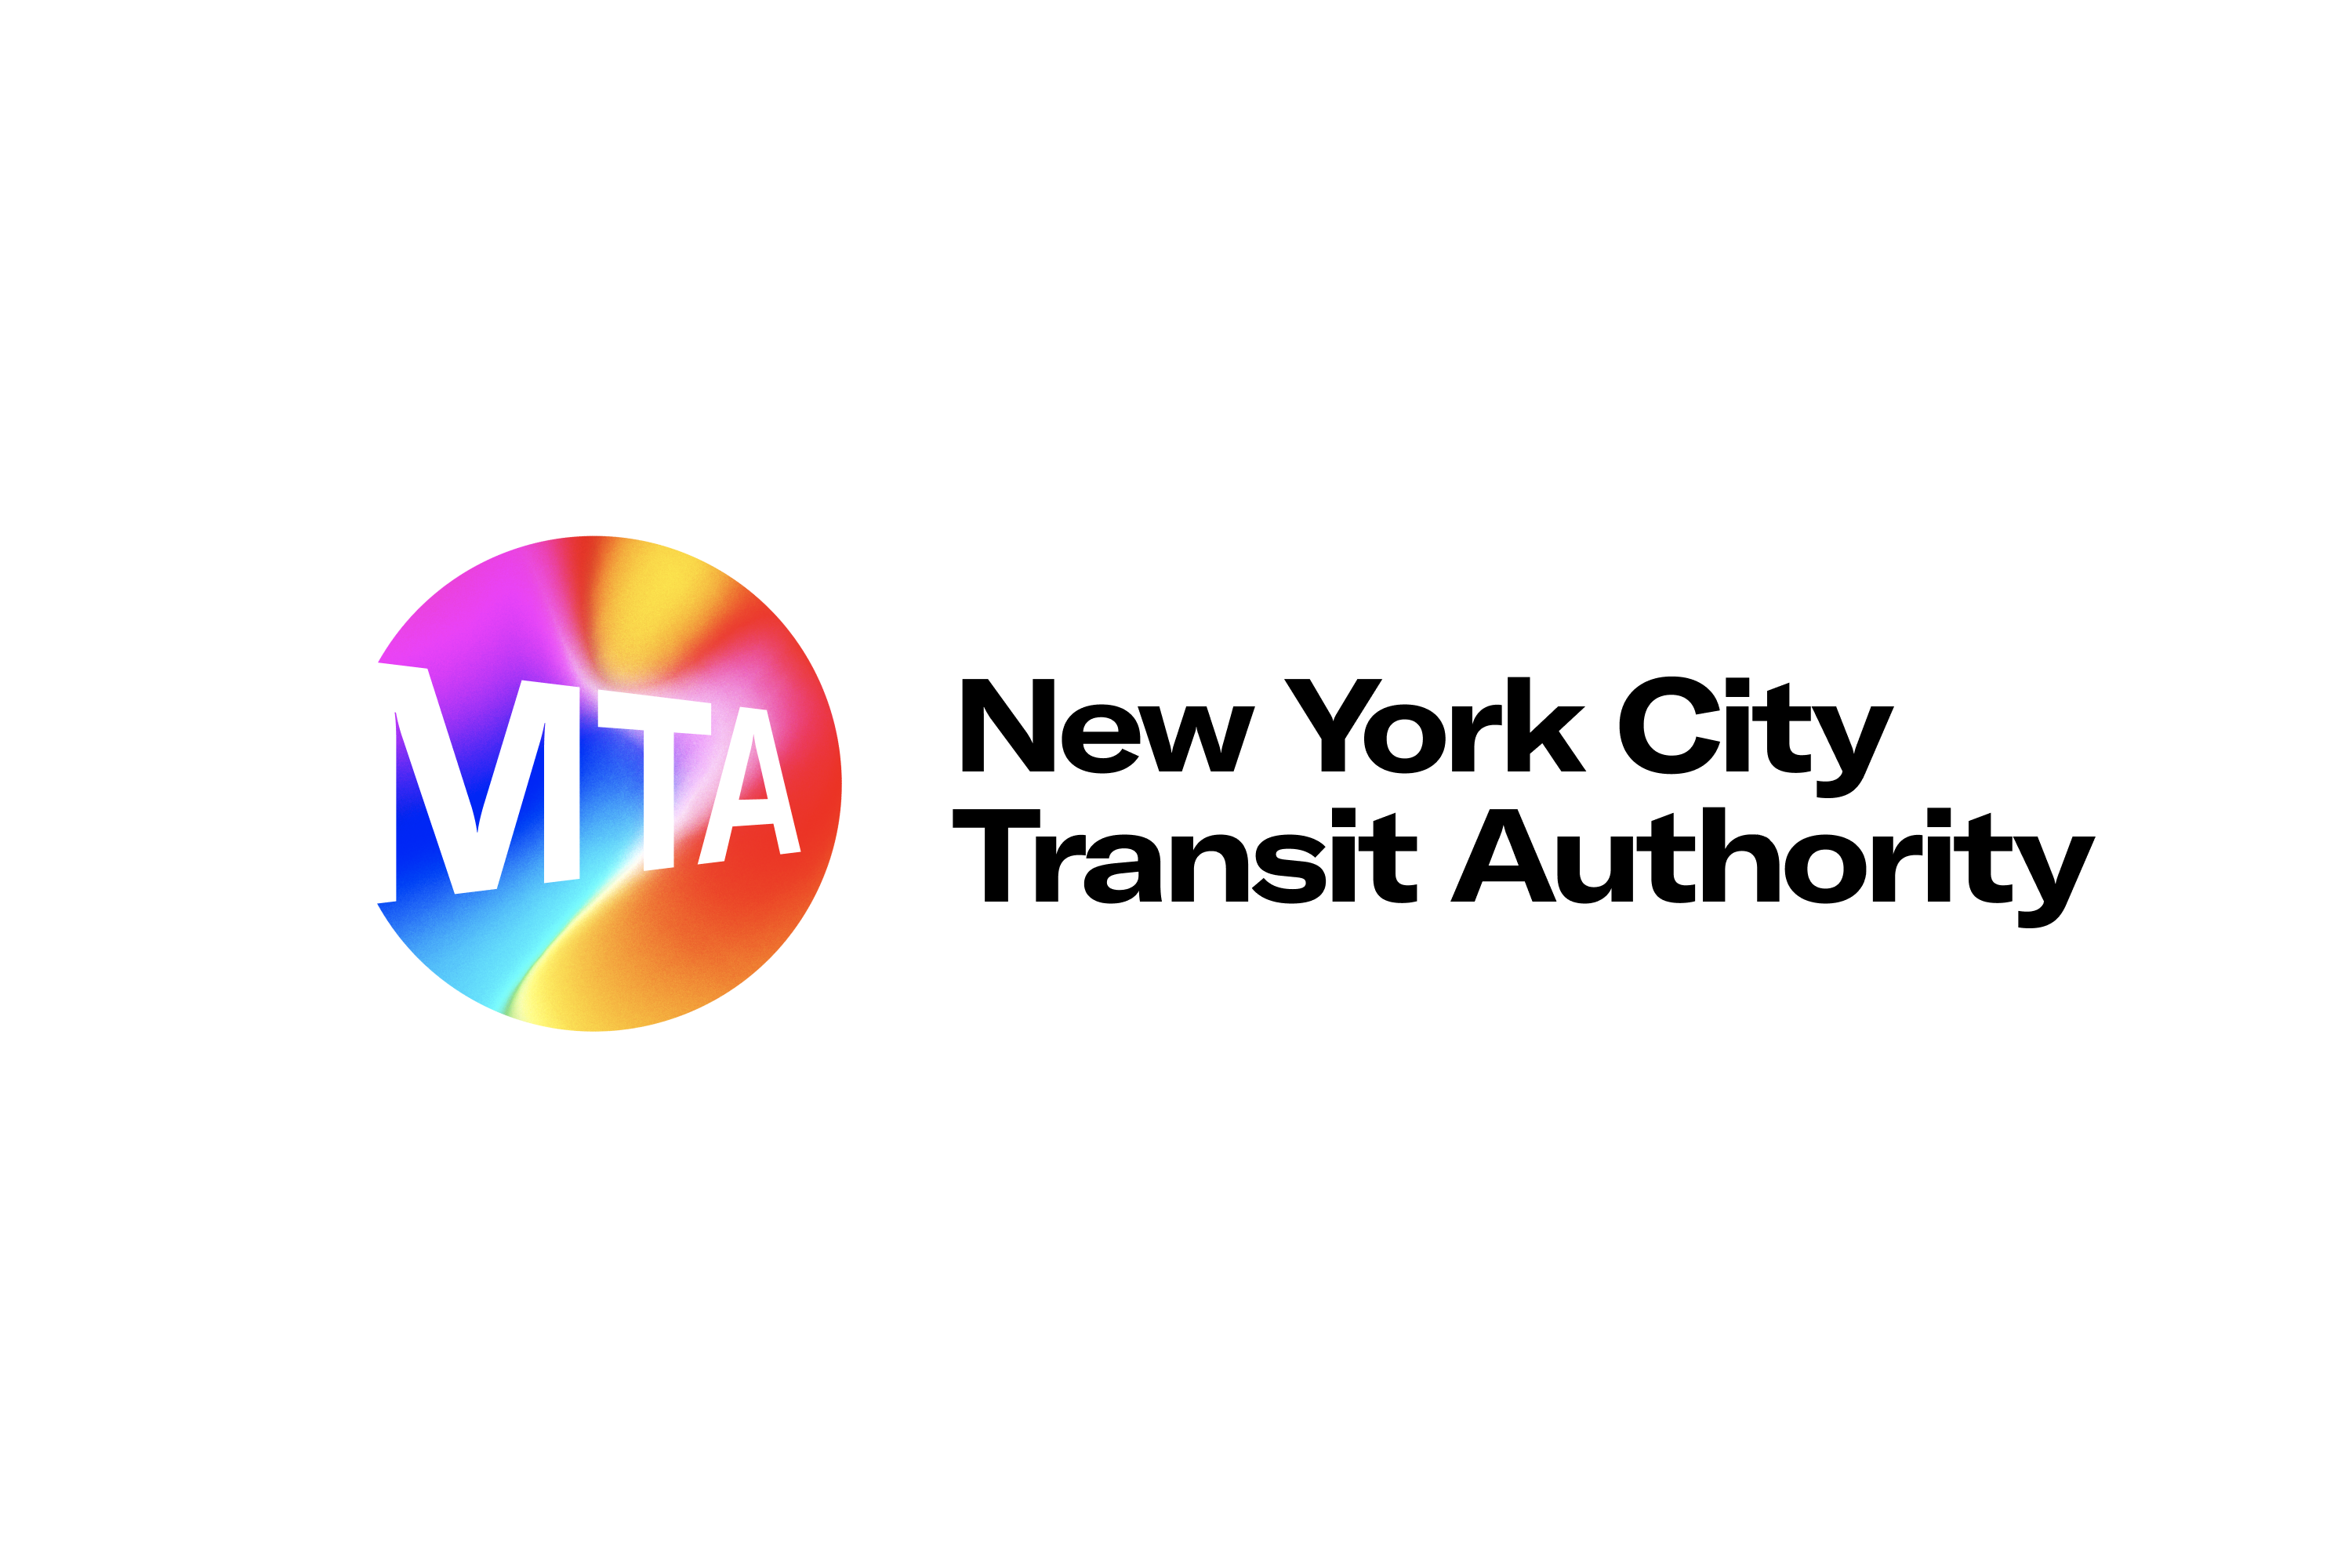 New York City Transit Authority Brand Guidelines: Logos